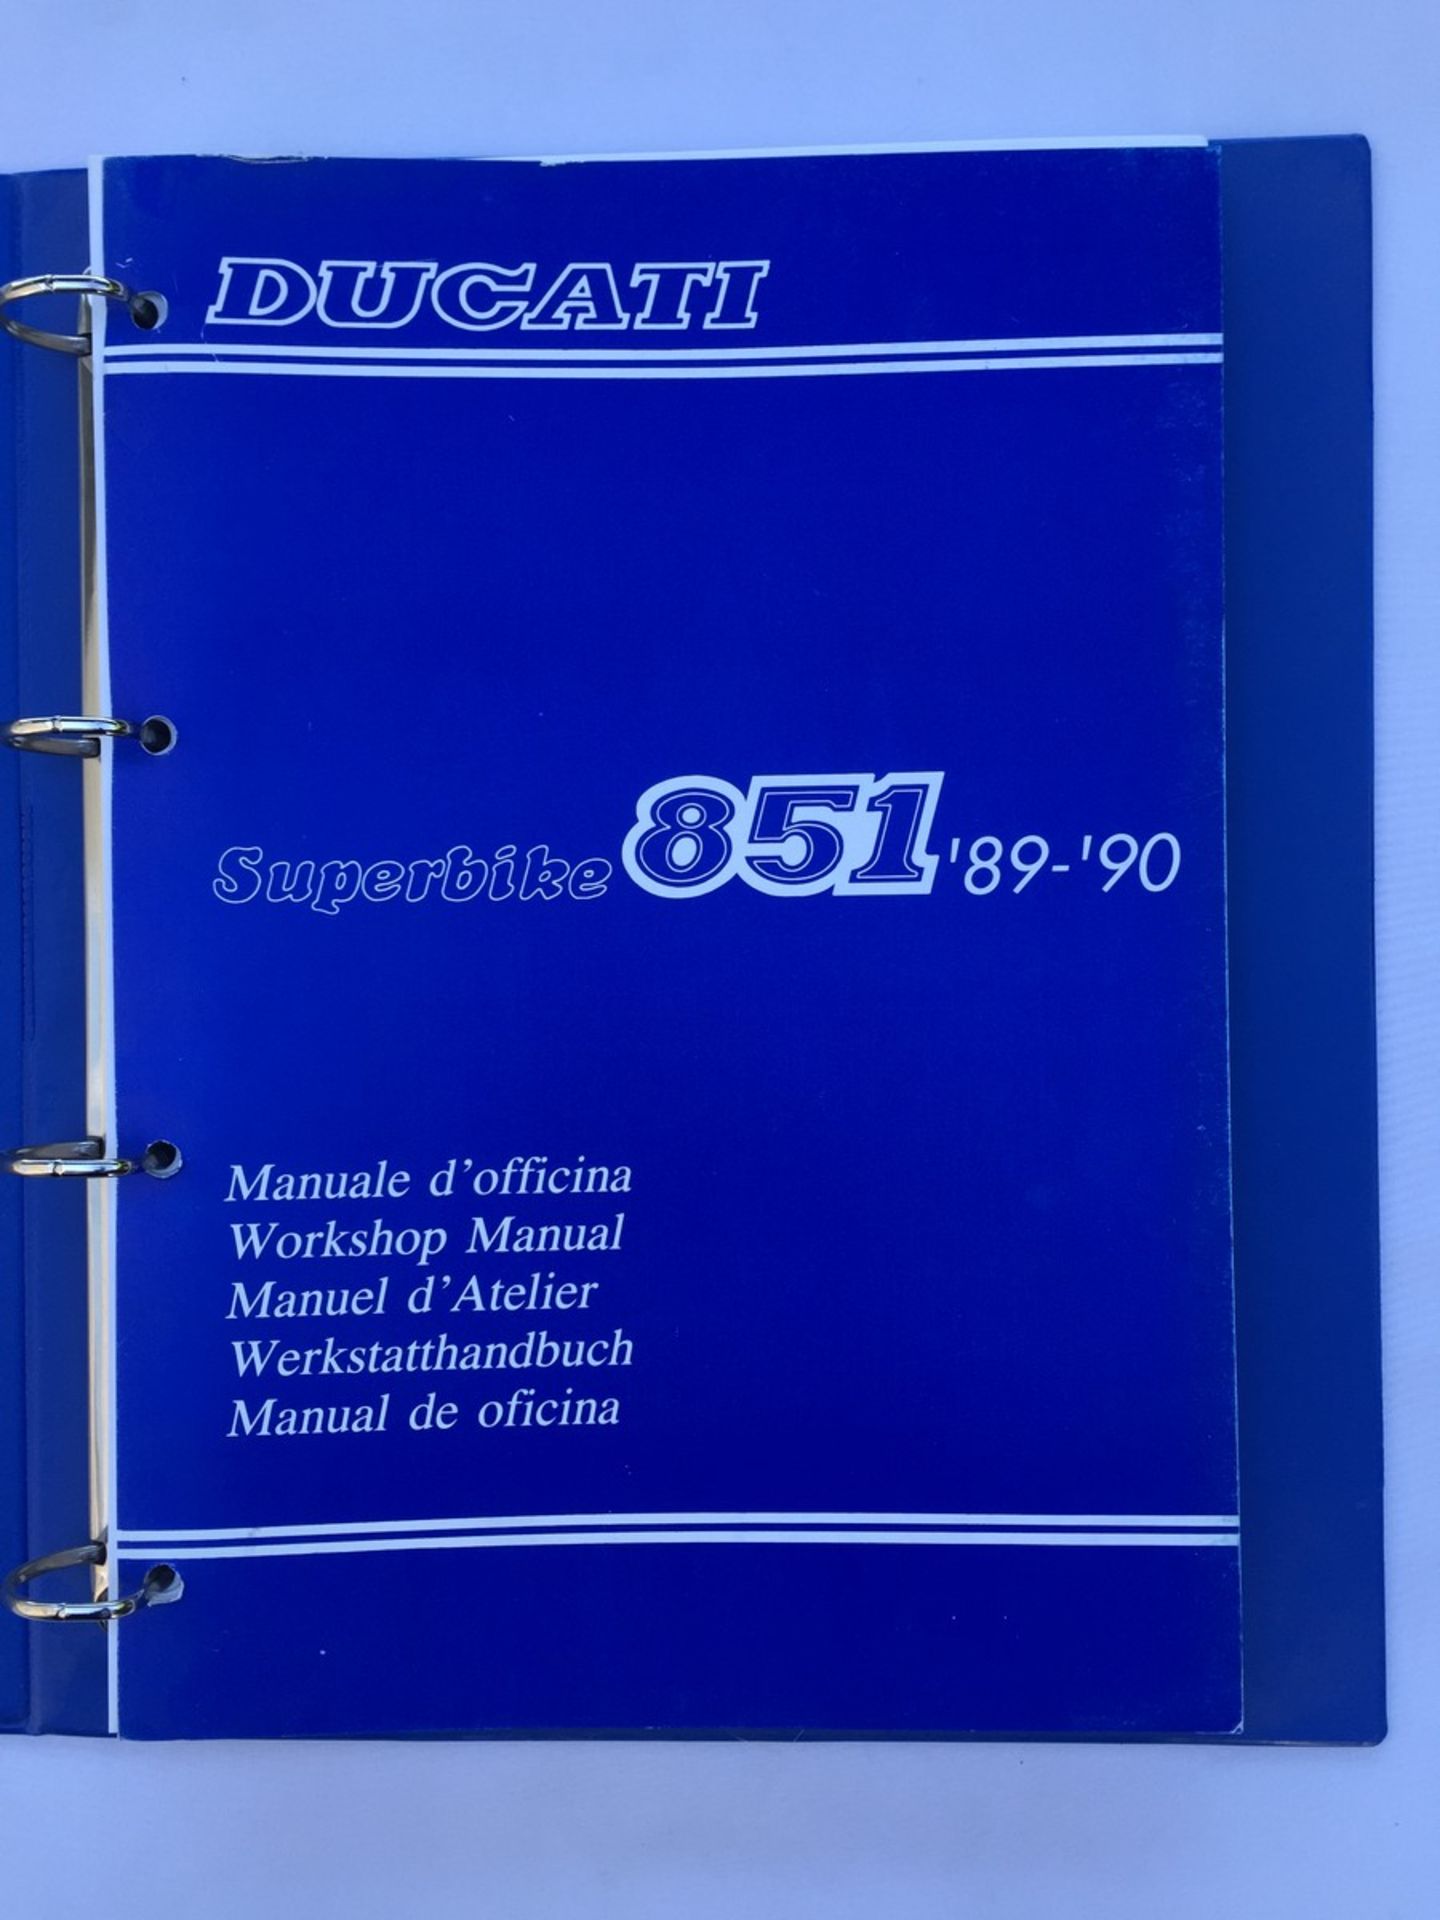 A Ducati 851 '89-90 manual for an early Strada.